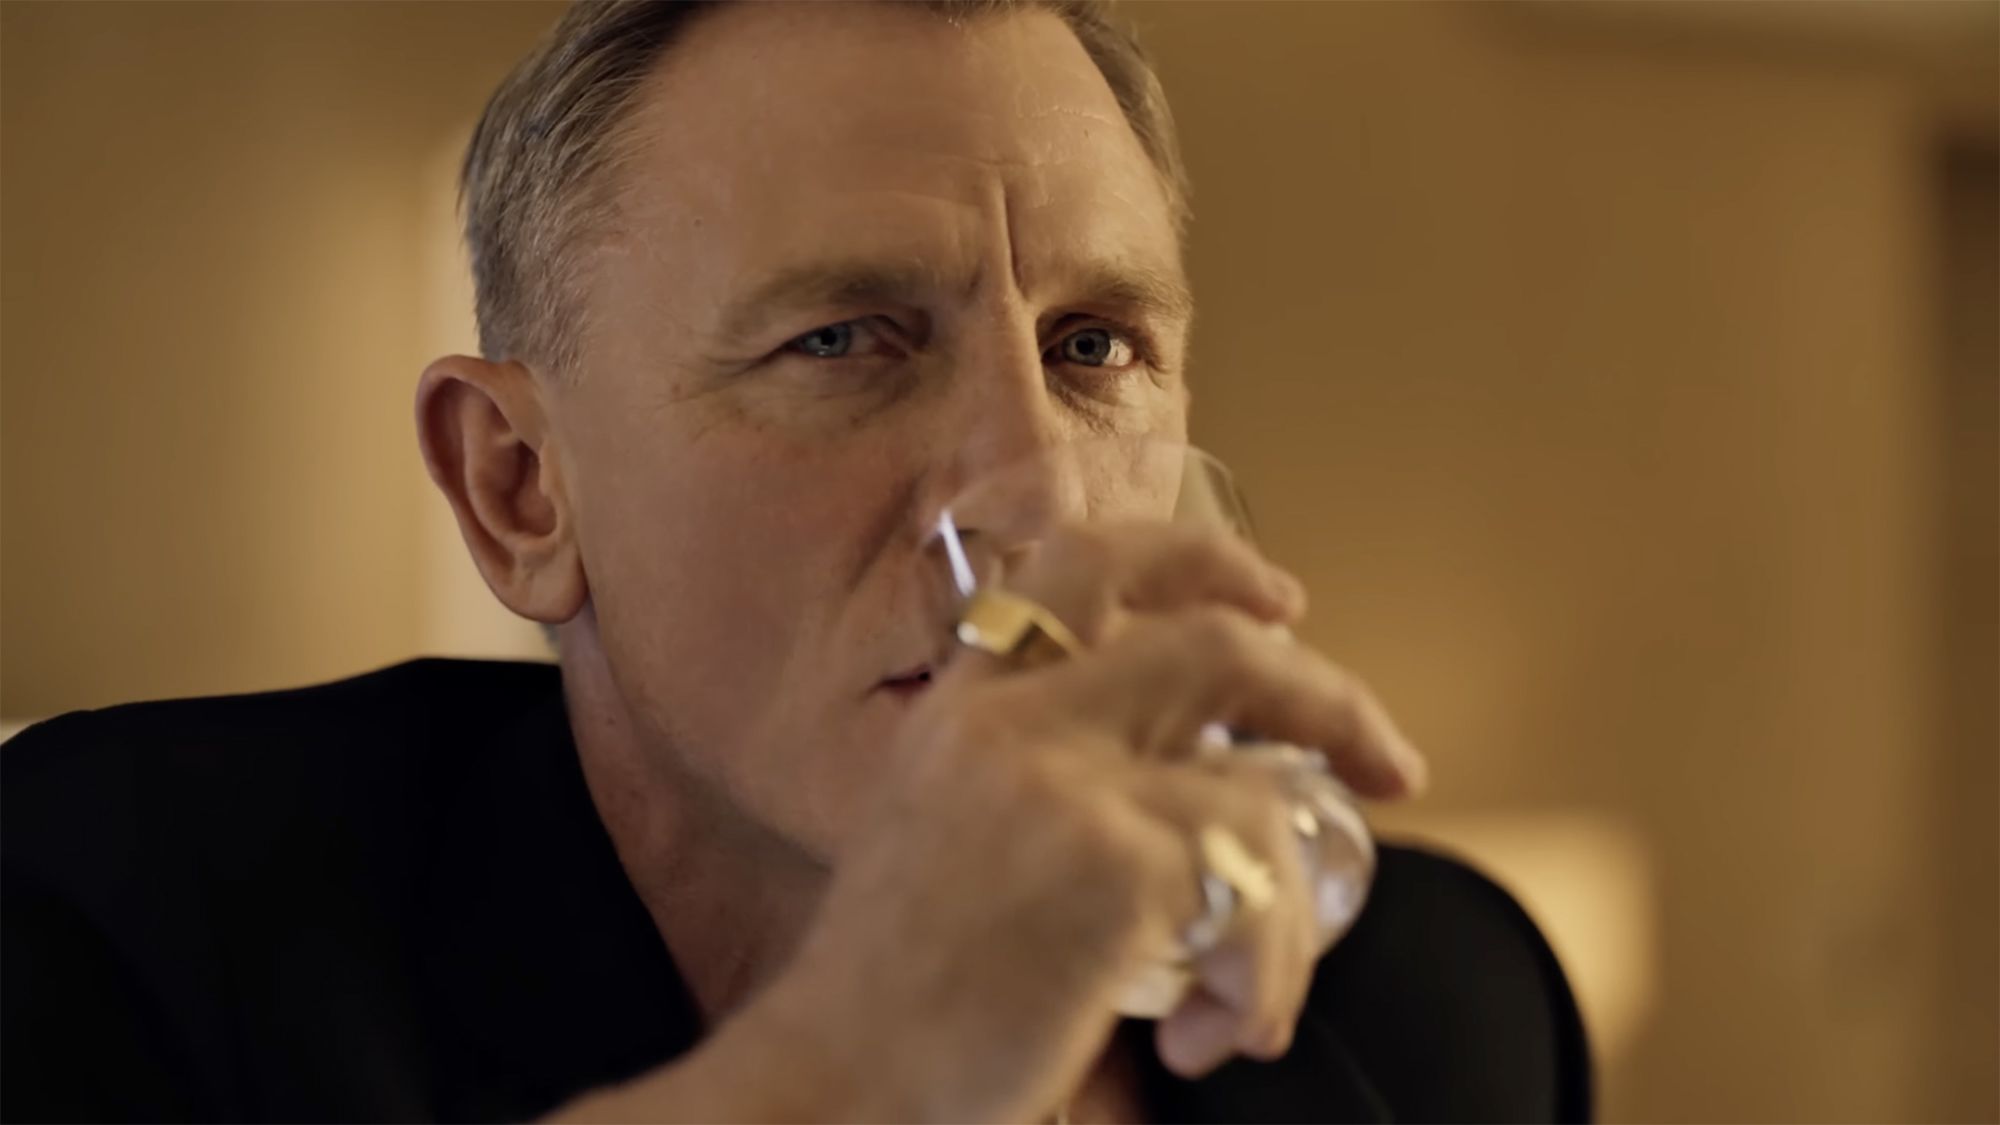 Daniel Craig is Shaken, Not Stirred in New Taika Waititi Directed Vodka Ad  - FandomWire